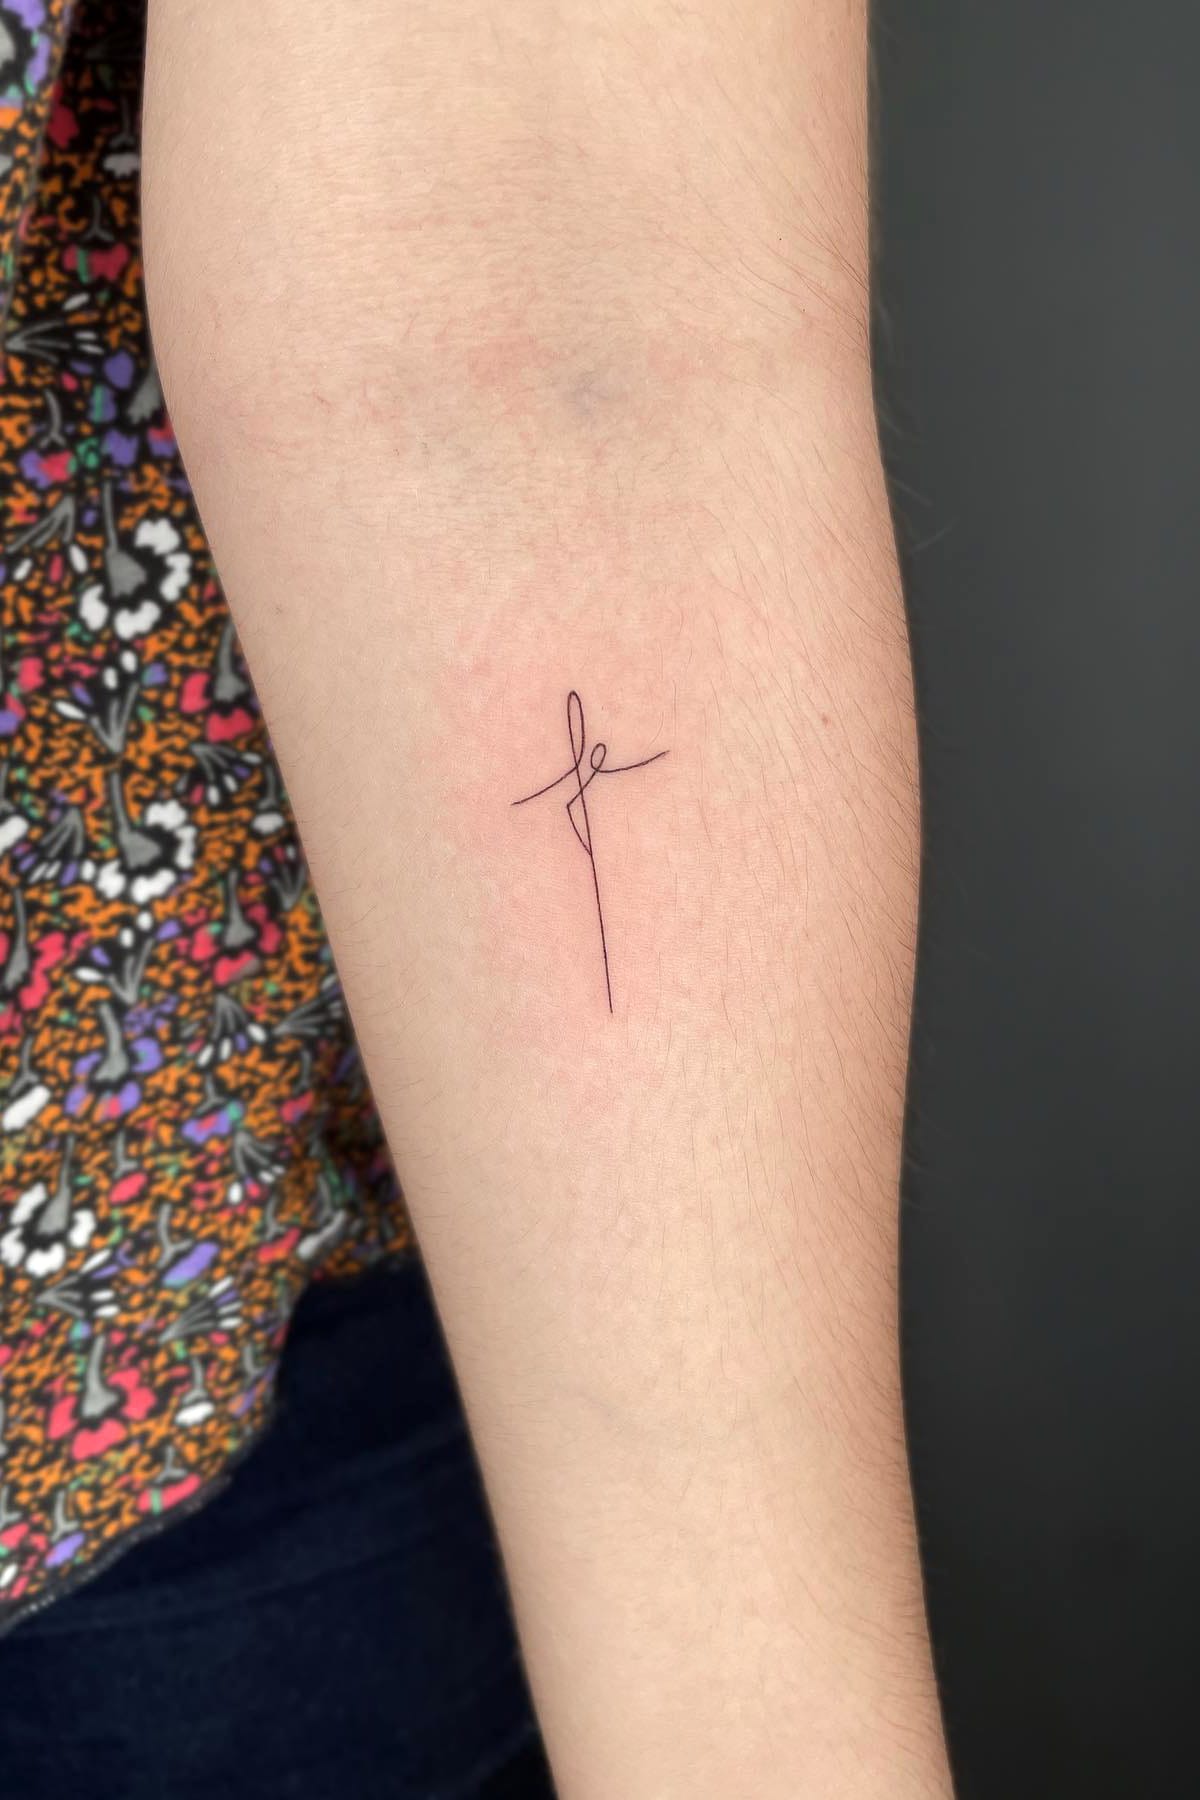 Small cross tattoo on forearm